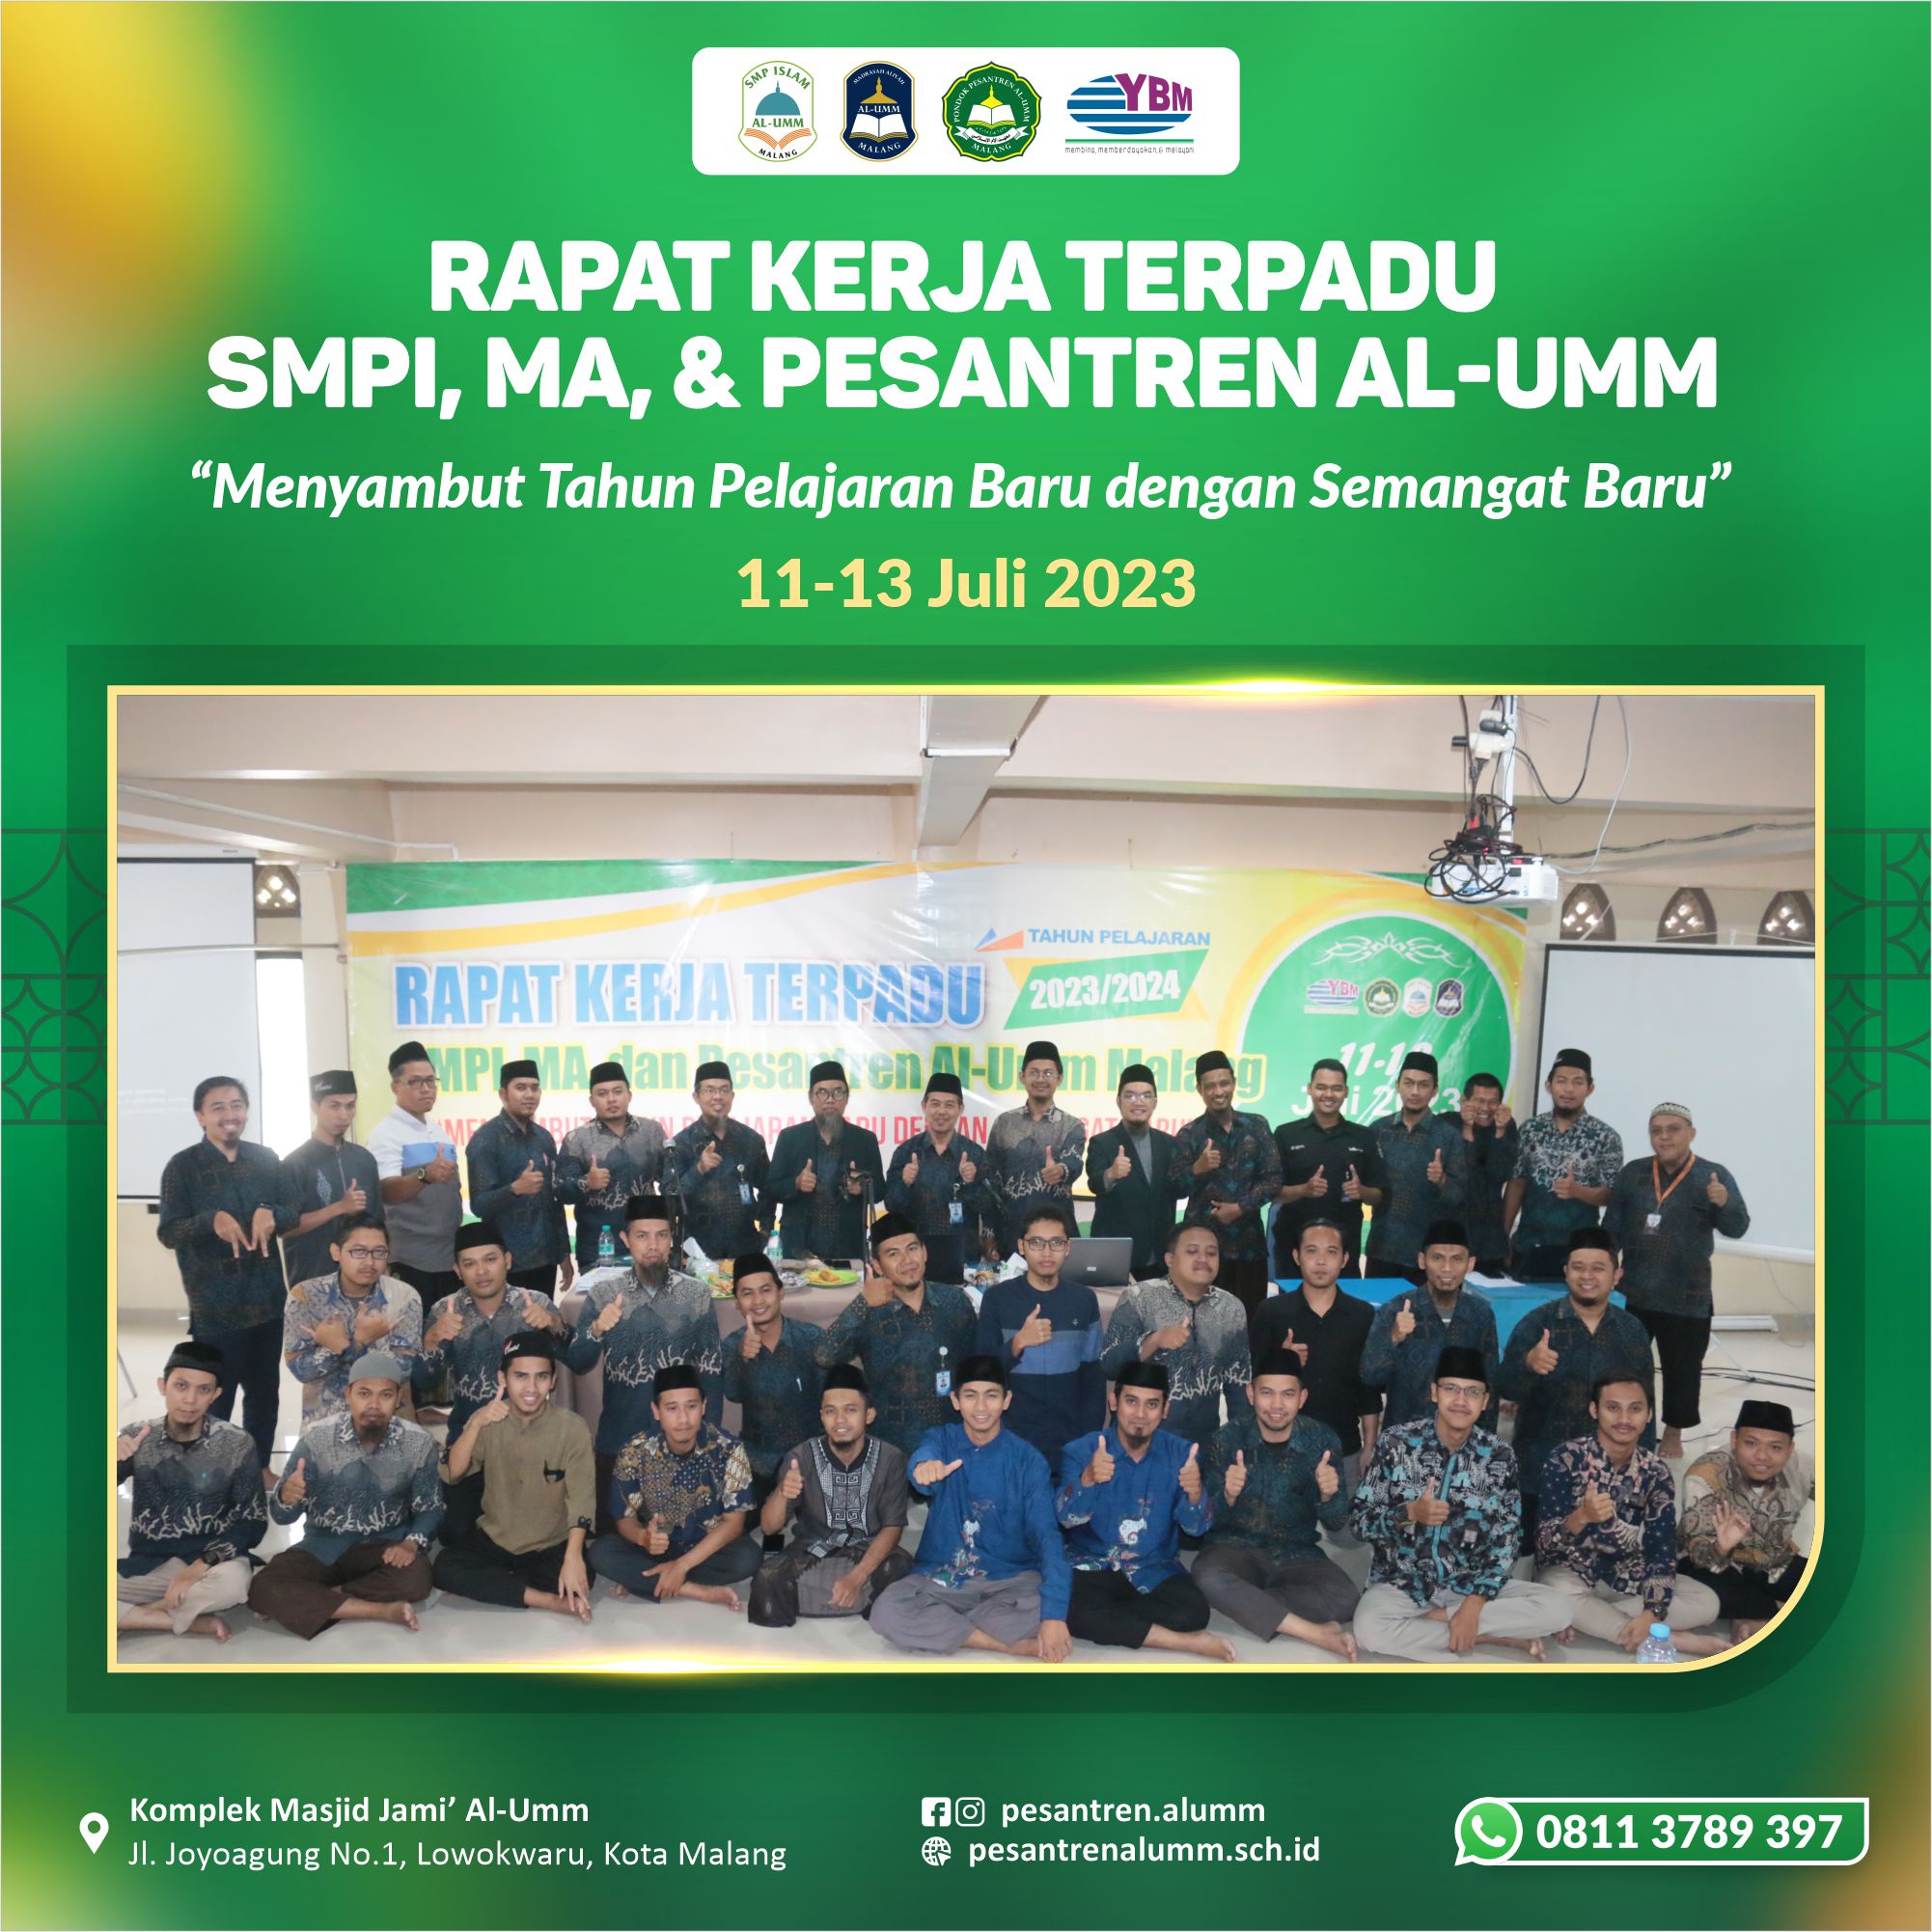 Rapat Kerja Terpadu SMPI, MA, Pesantern Al-UMM 2023